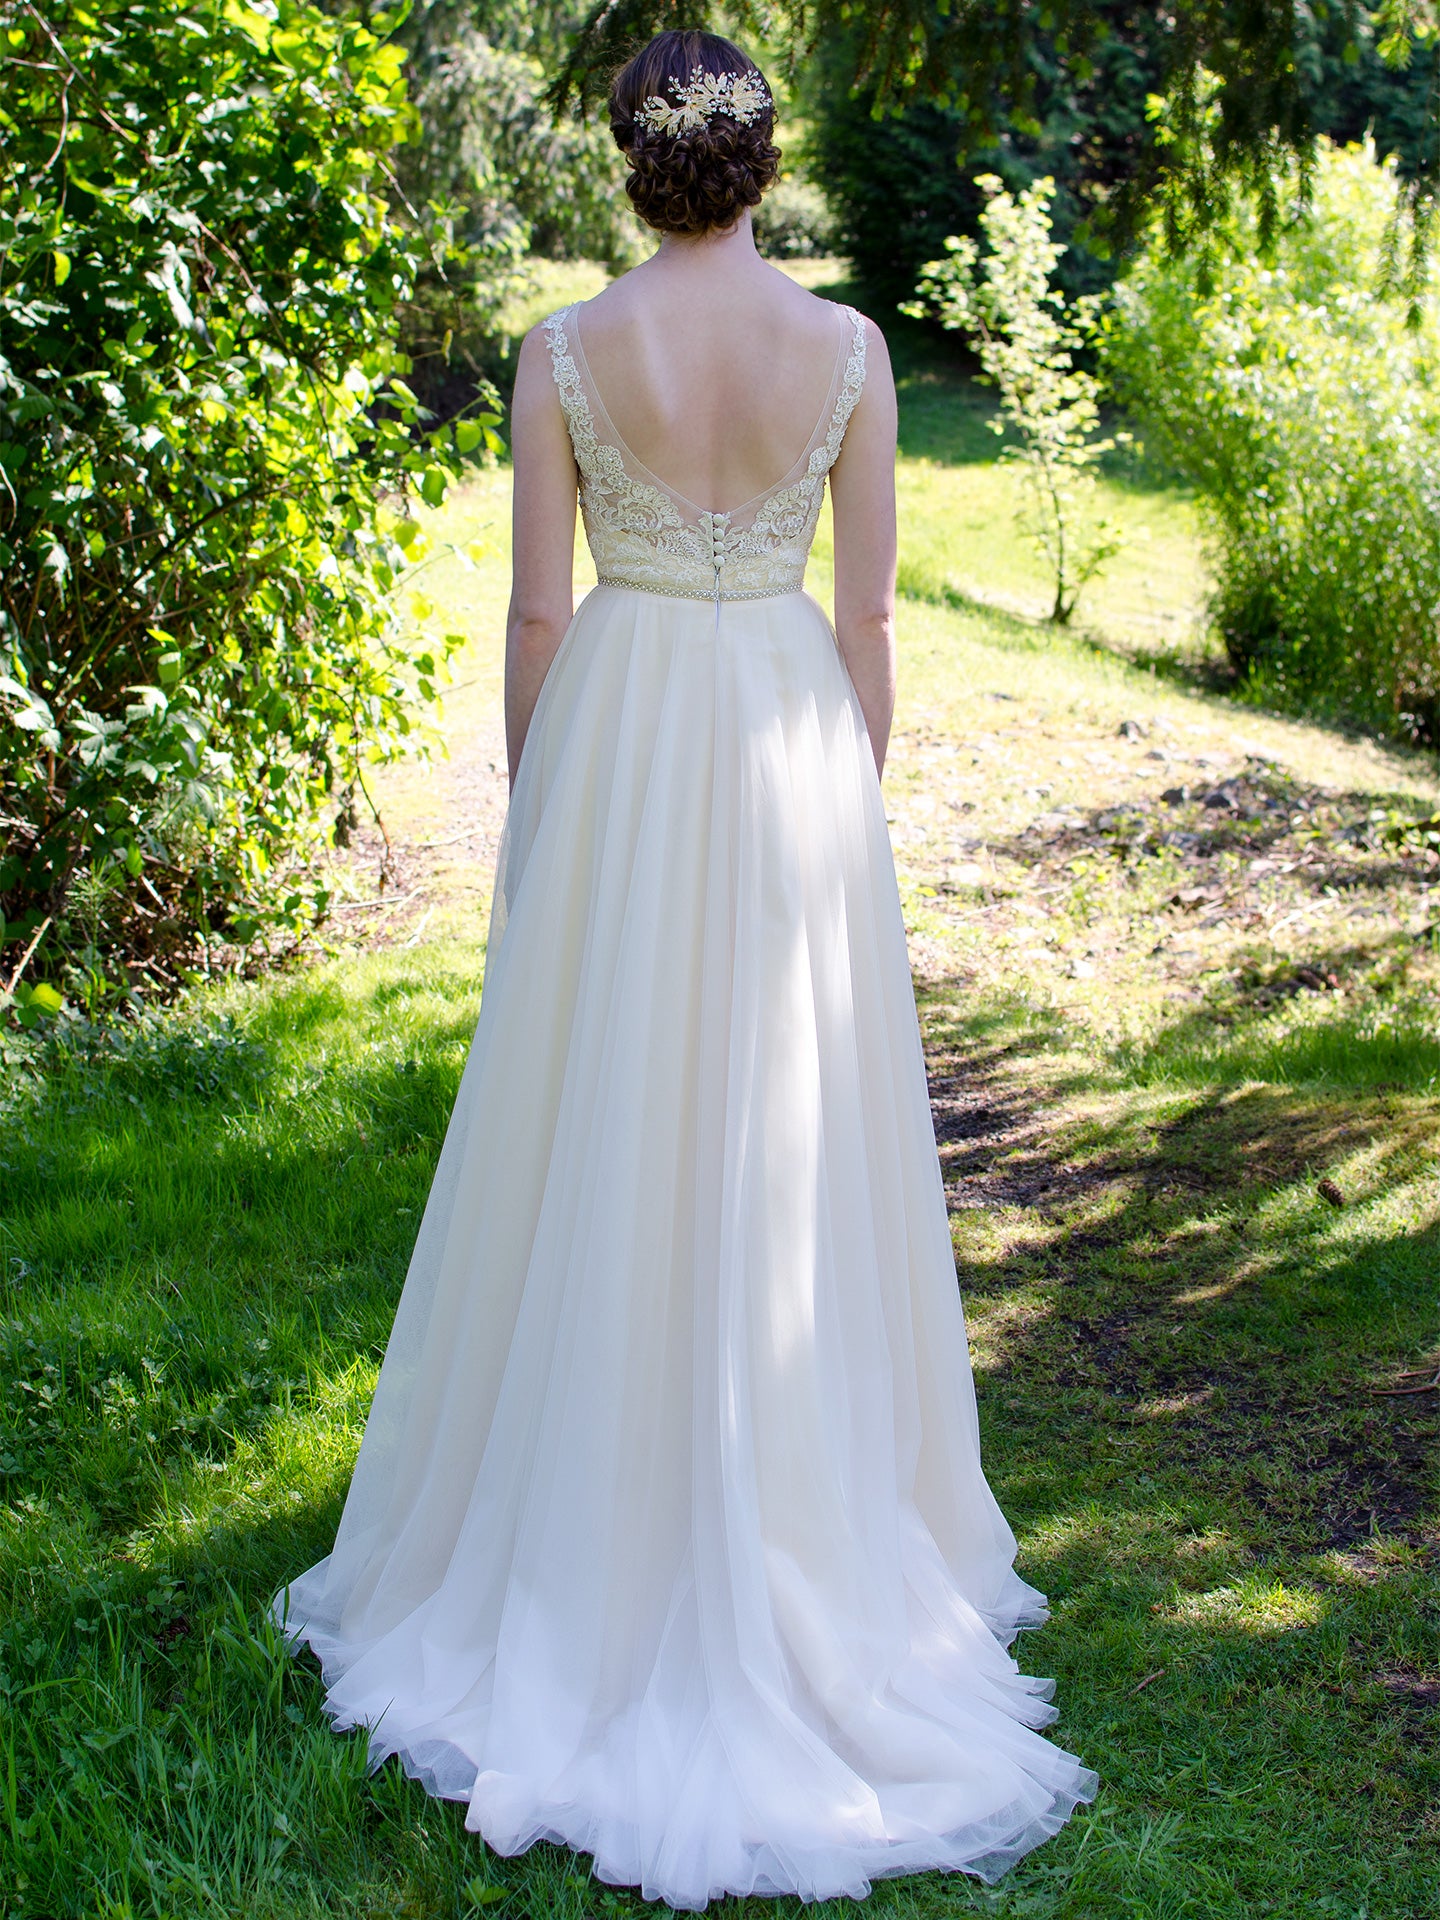 Sleeveless lace wedding dress with tulle skirt 4053-wedding-